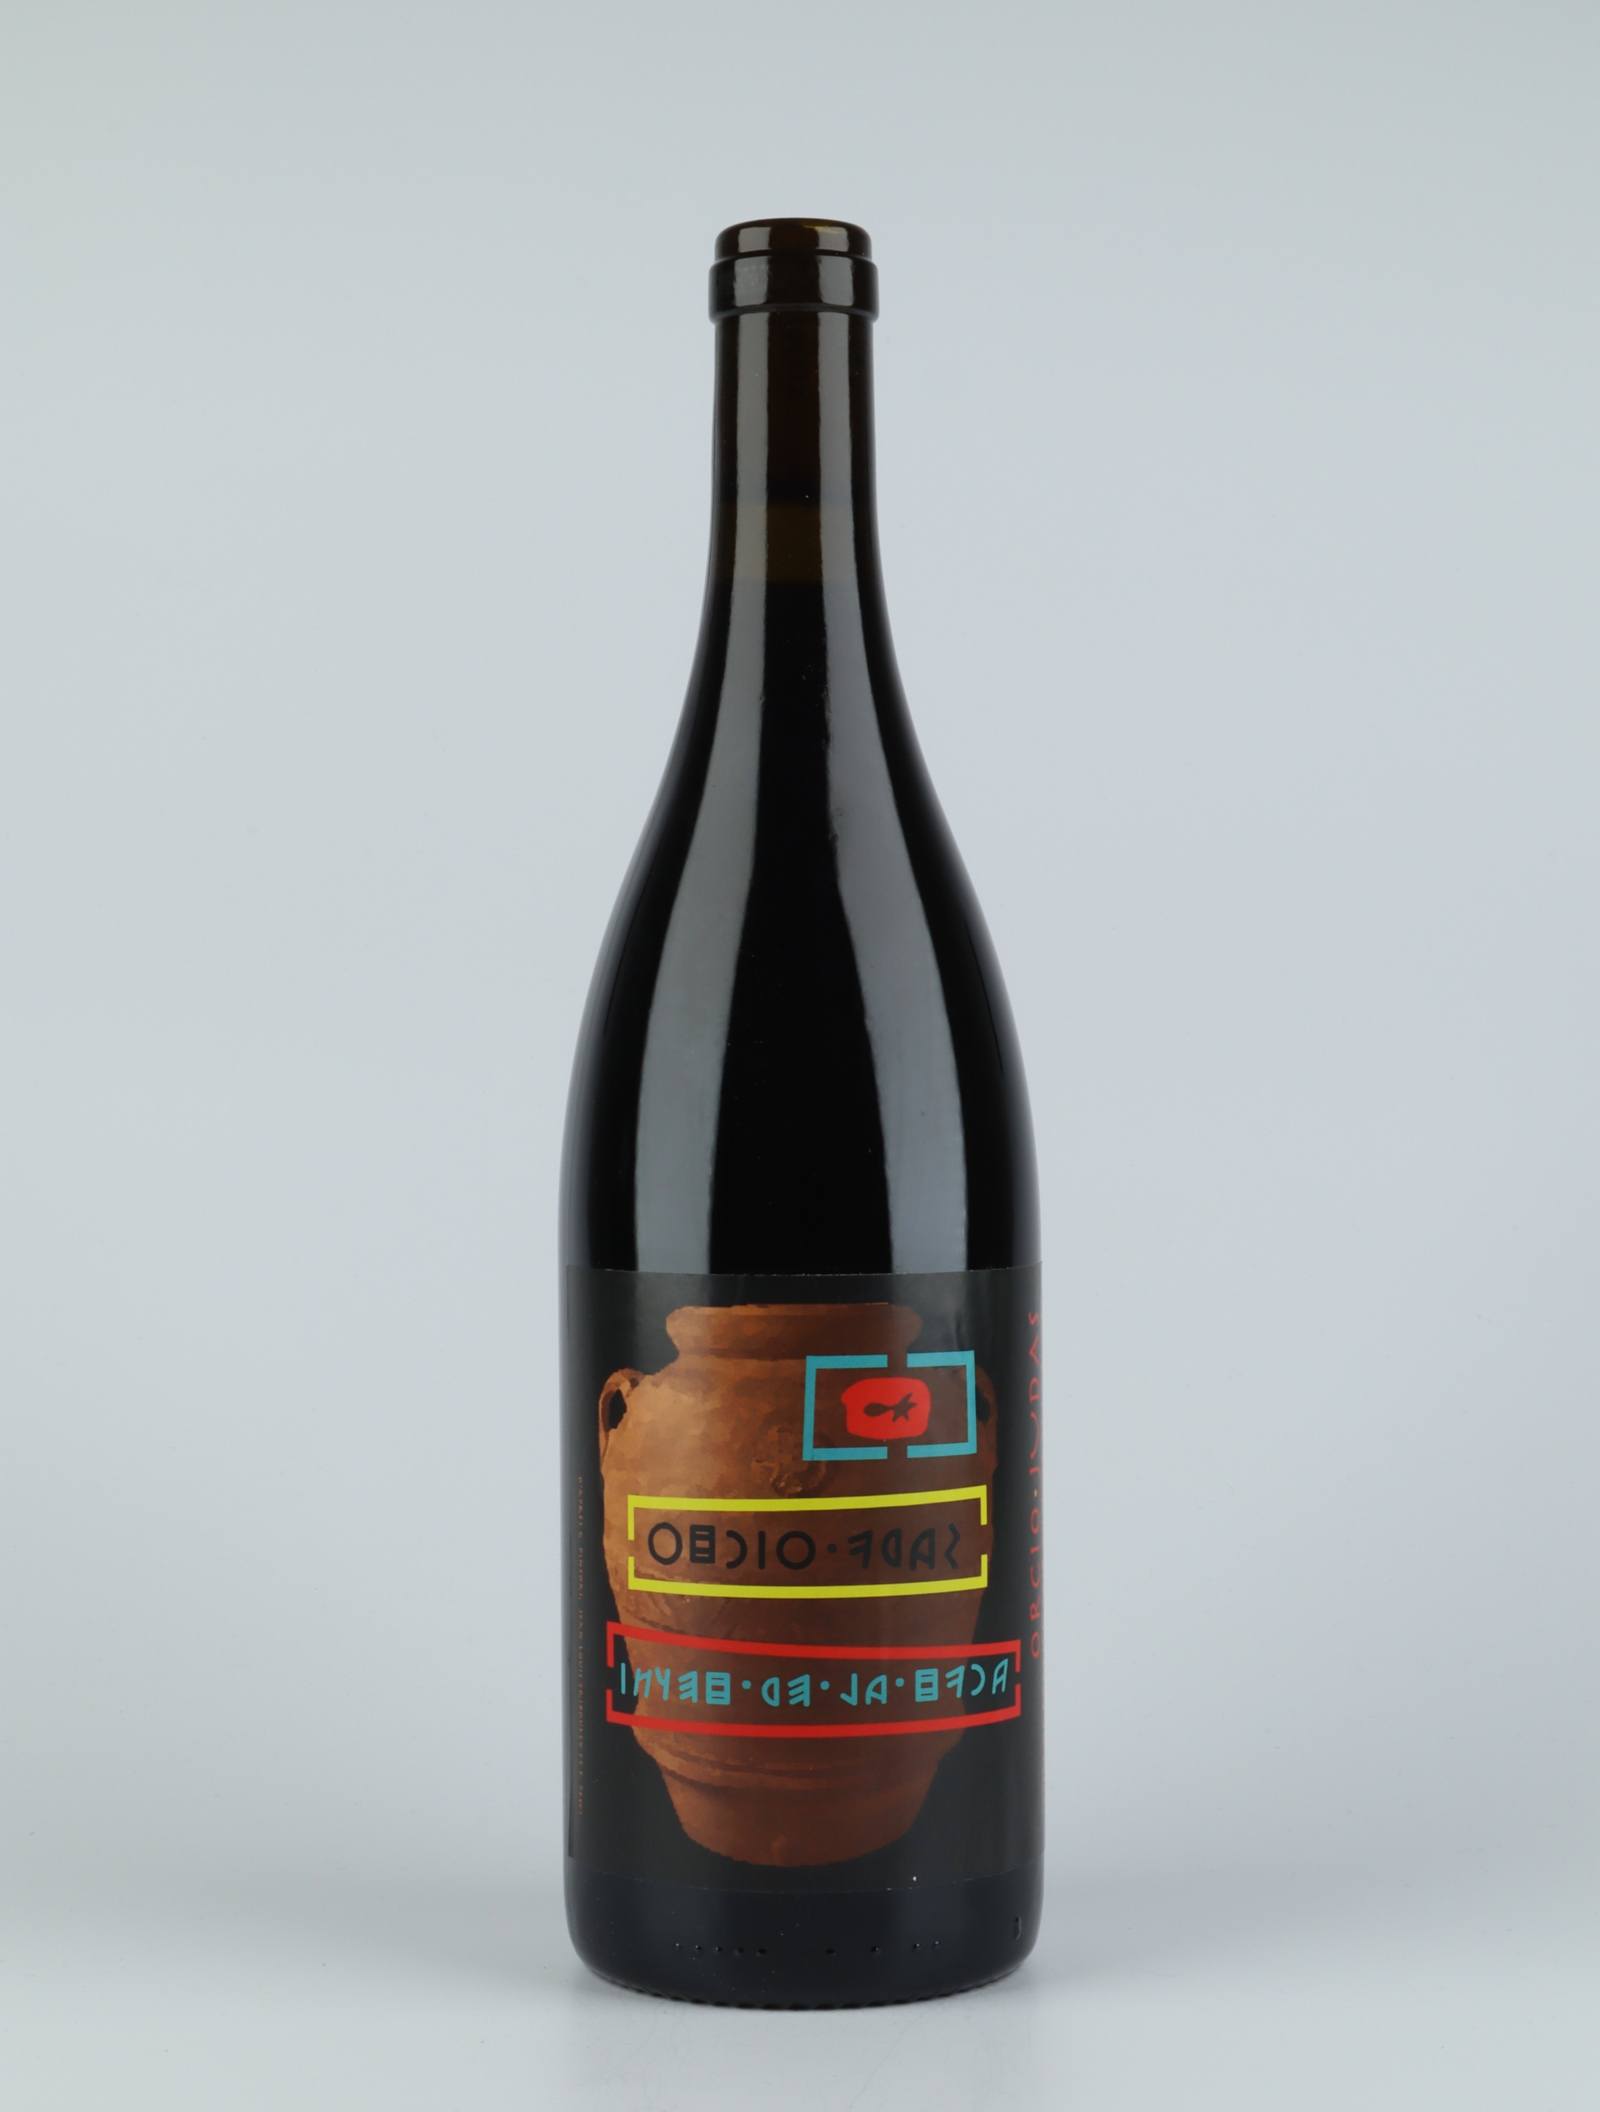 A bottle 2018 Orcio Judas Red wine from Vinyer de la Ruca, Rousillon in France